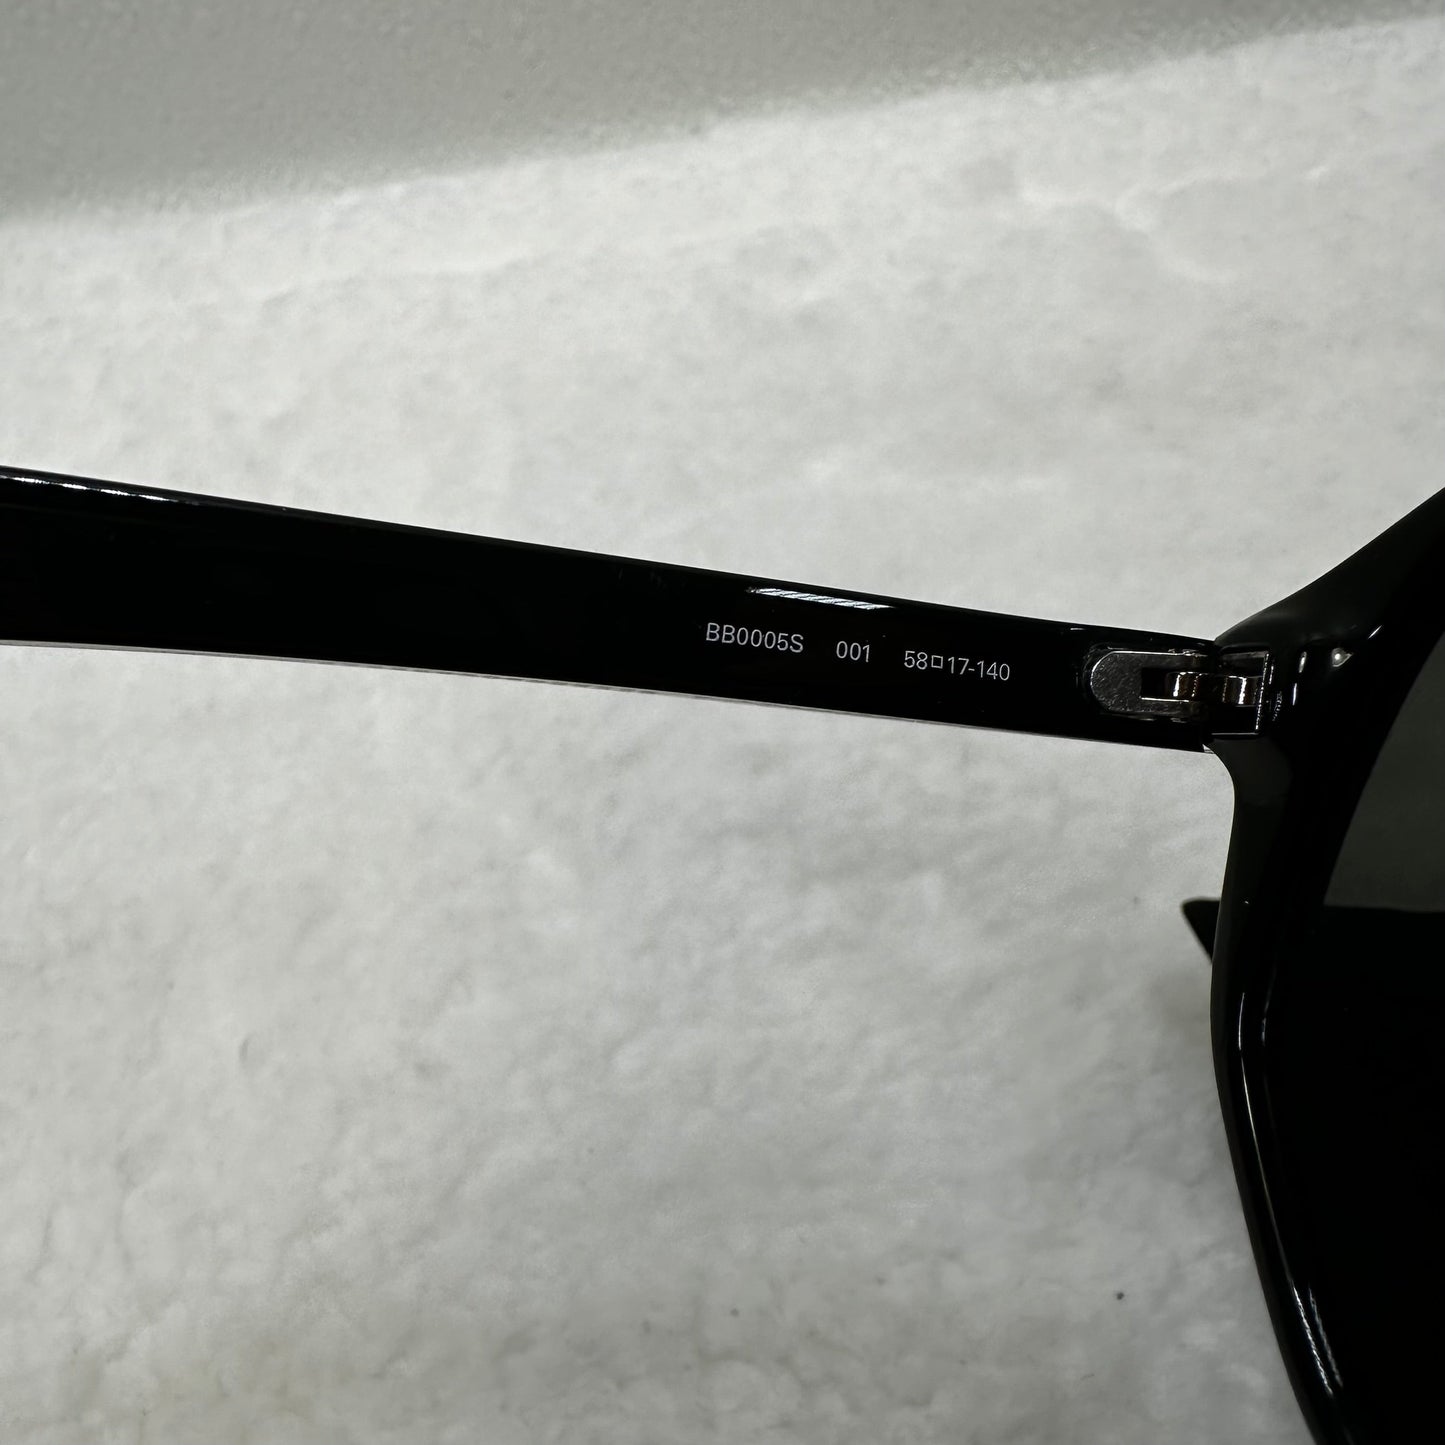 Sunglasses Designer Balenciaga